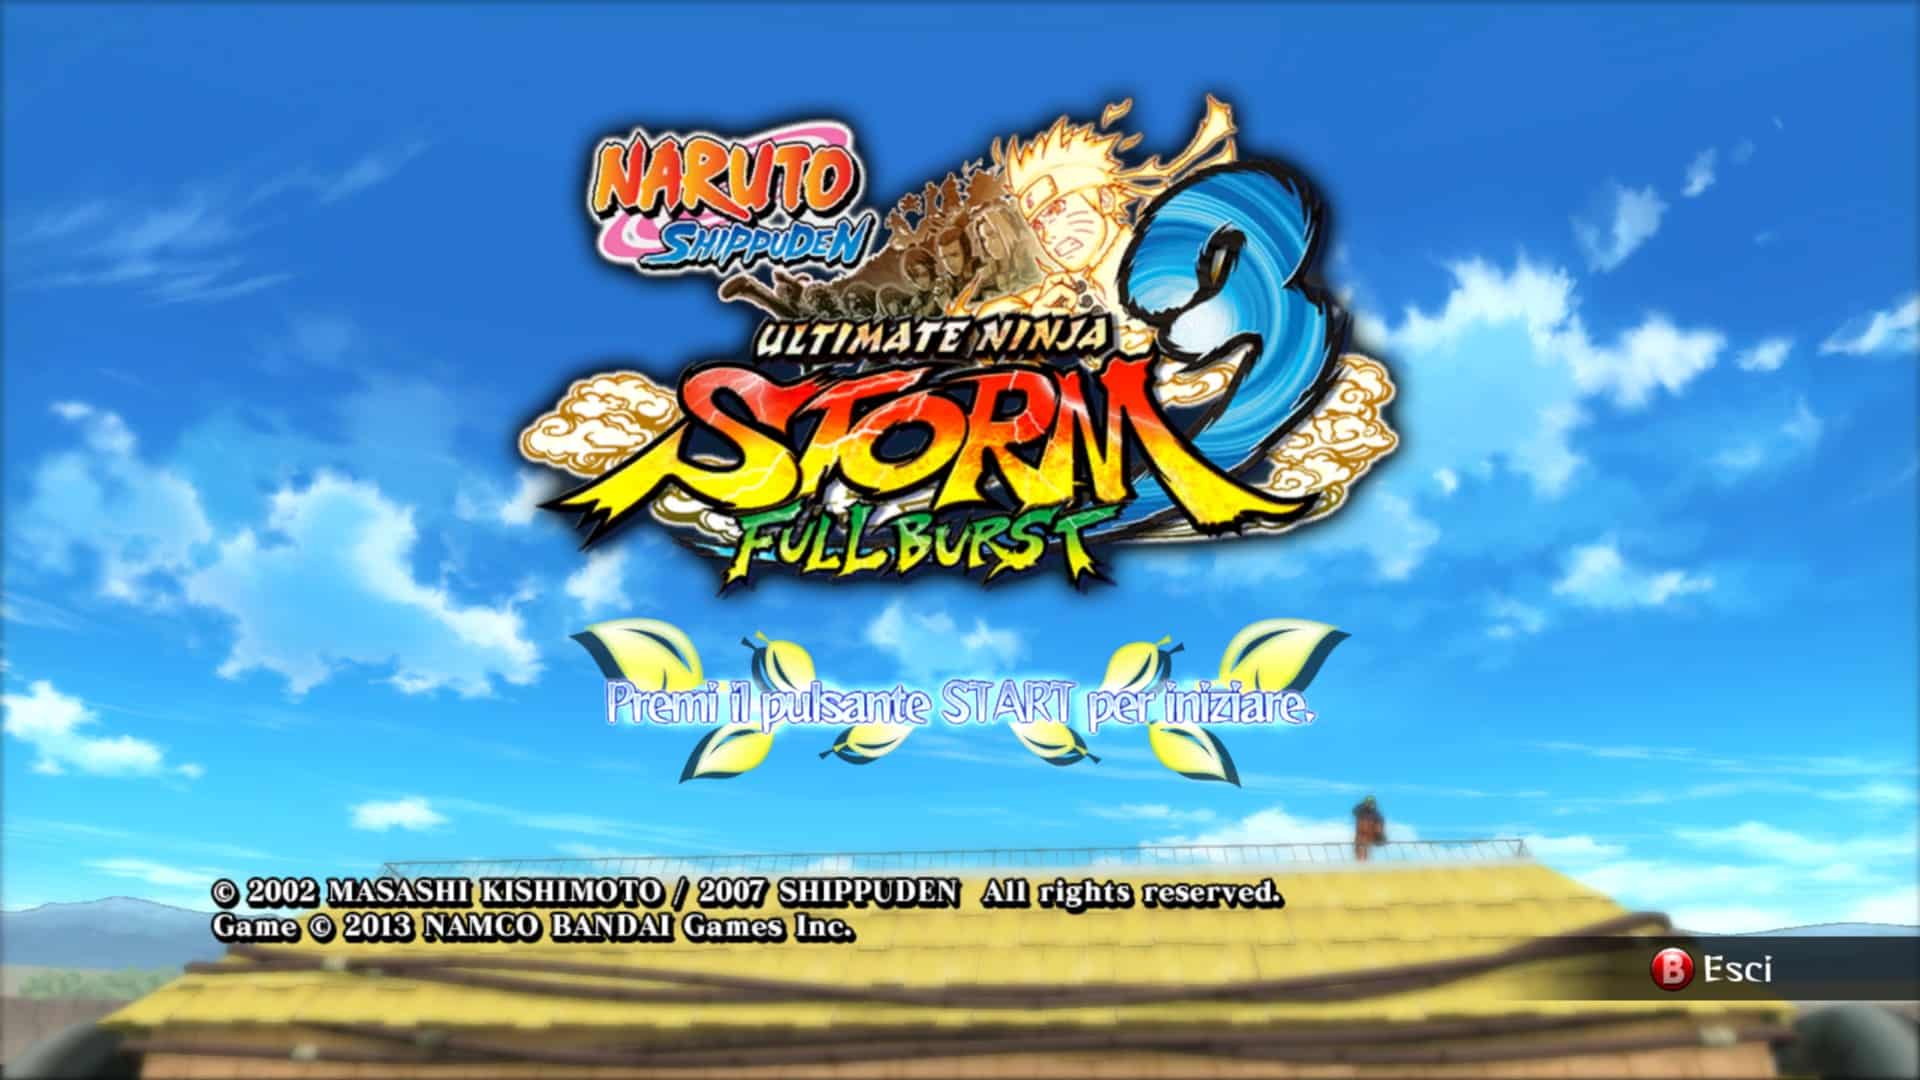 Naruto Shippuden Ultimate Ninja Storm 3: Full Burst - Recensione 2